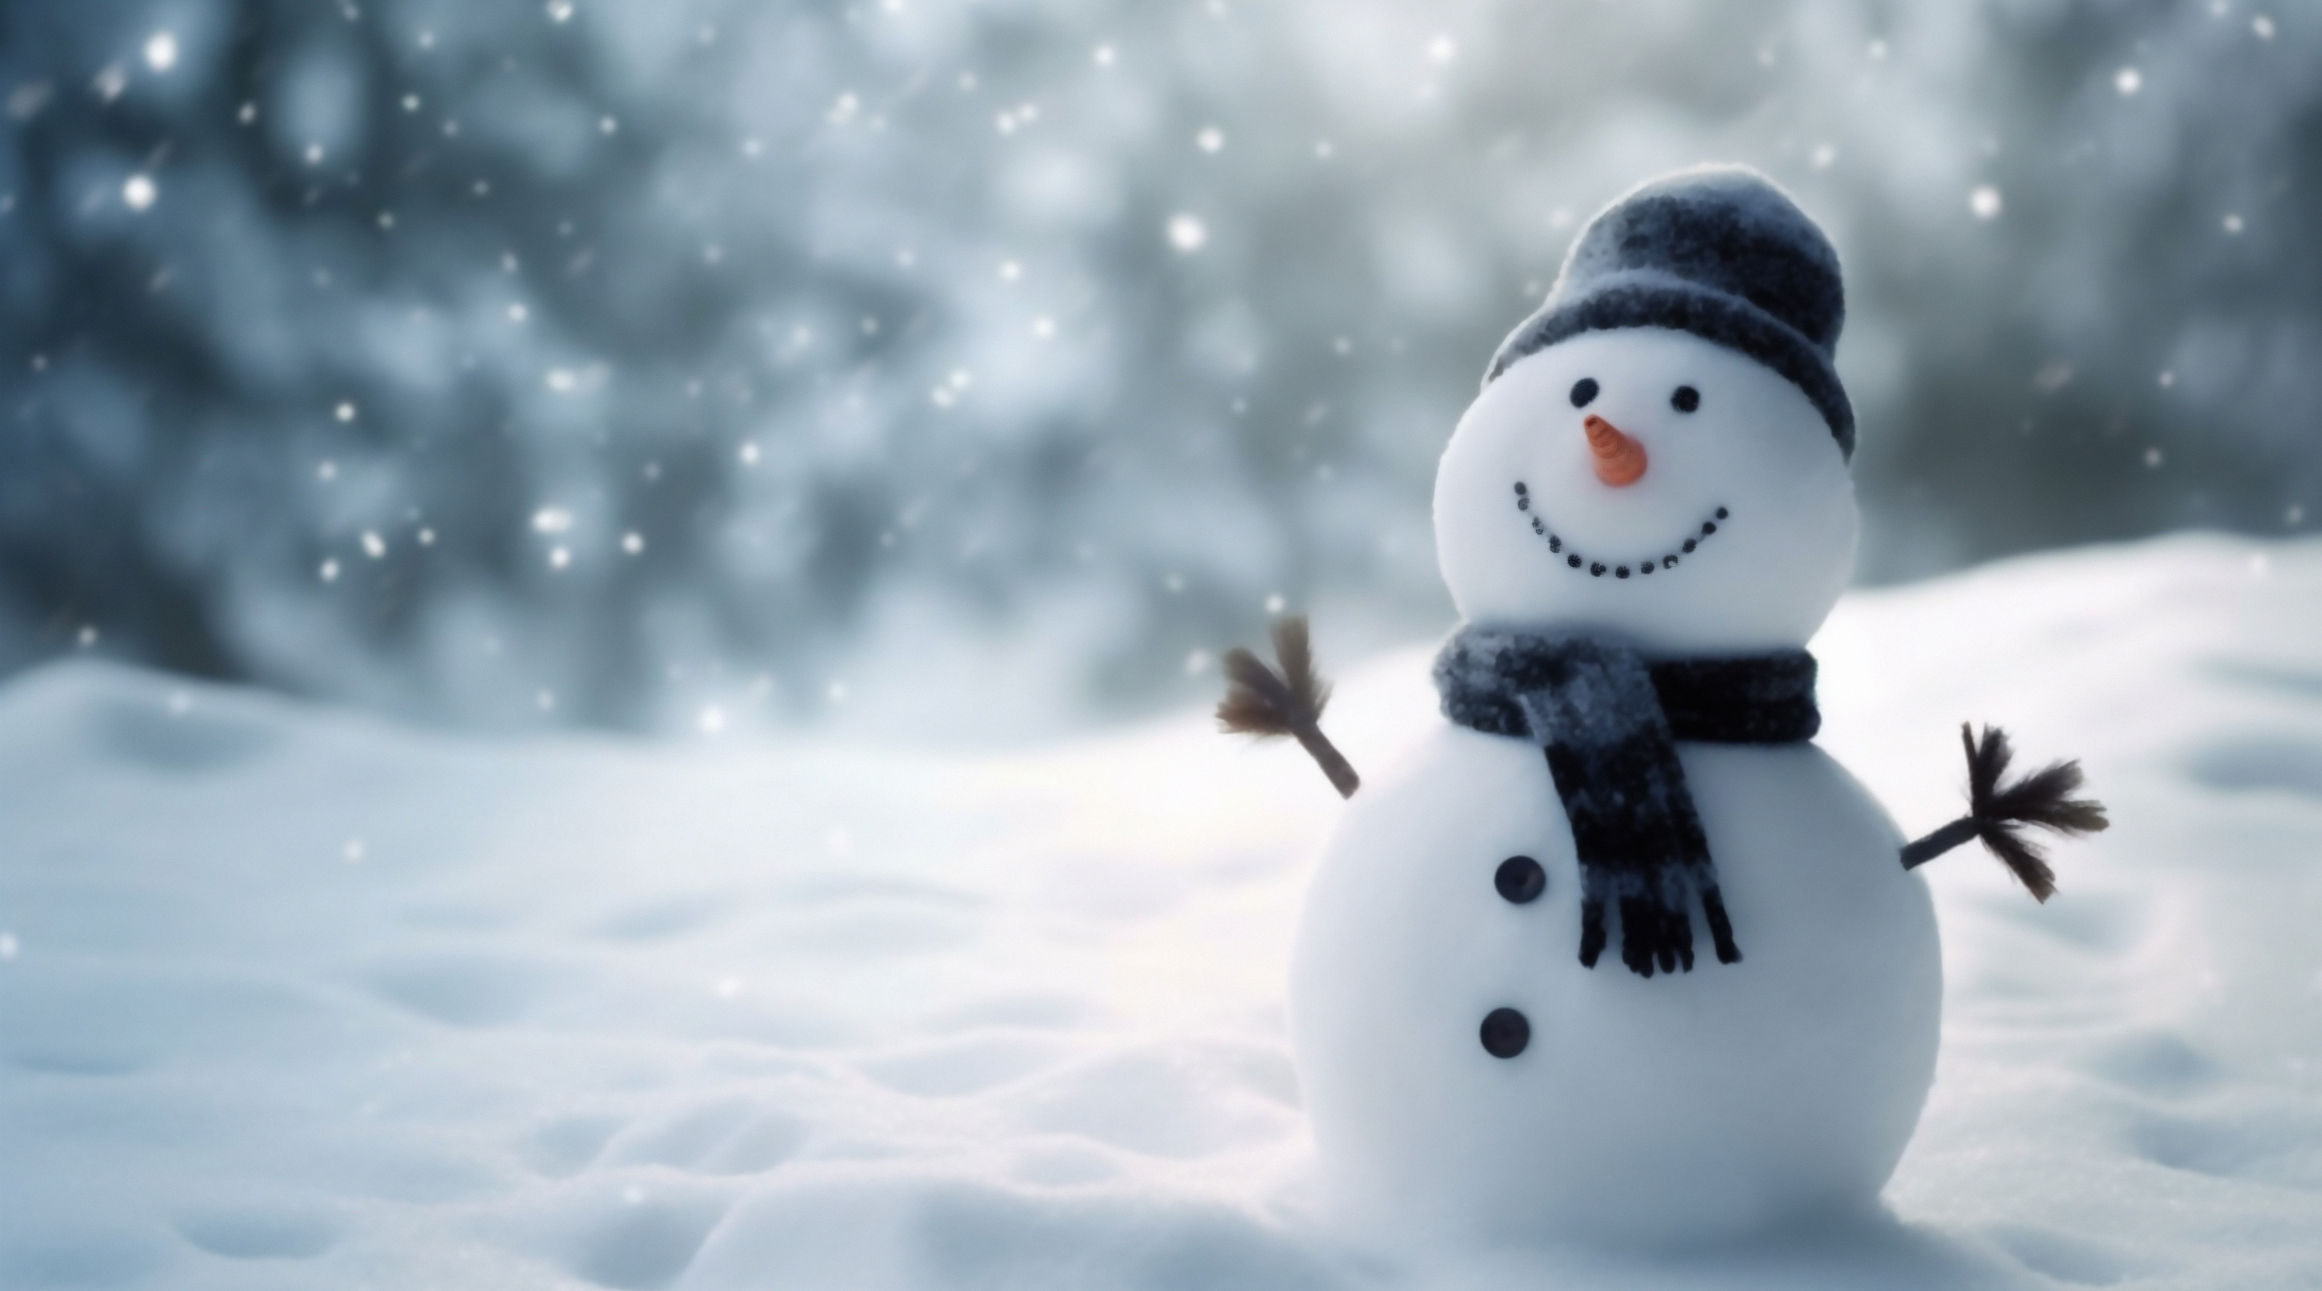 debbie bondoc recommends watch frosty the snowman online pic